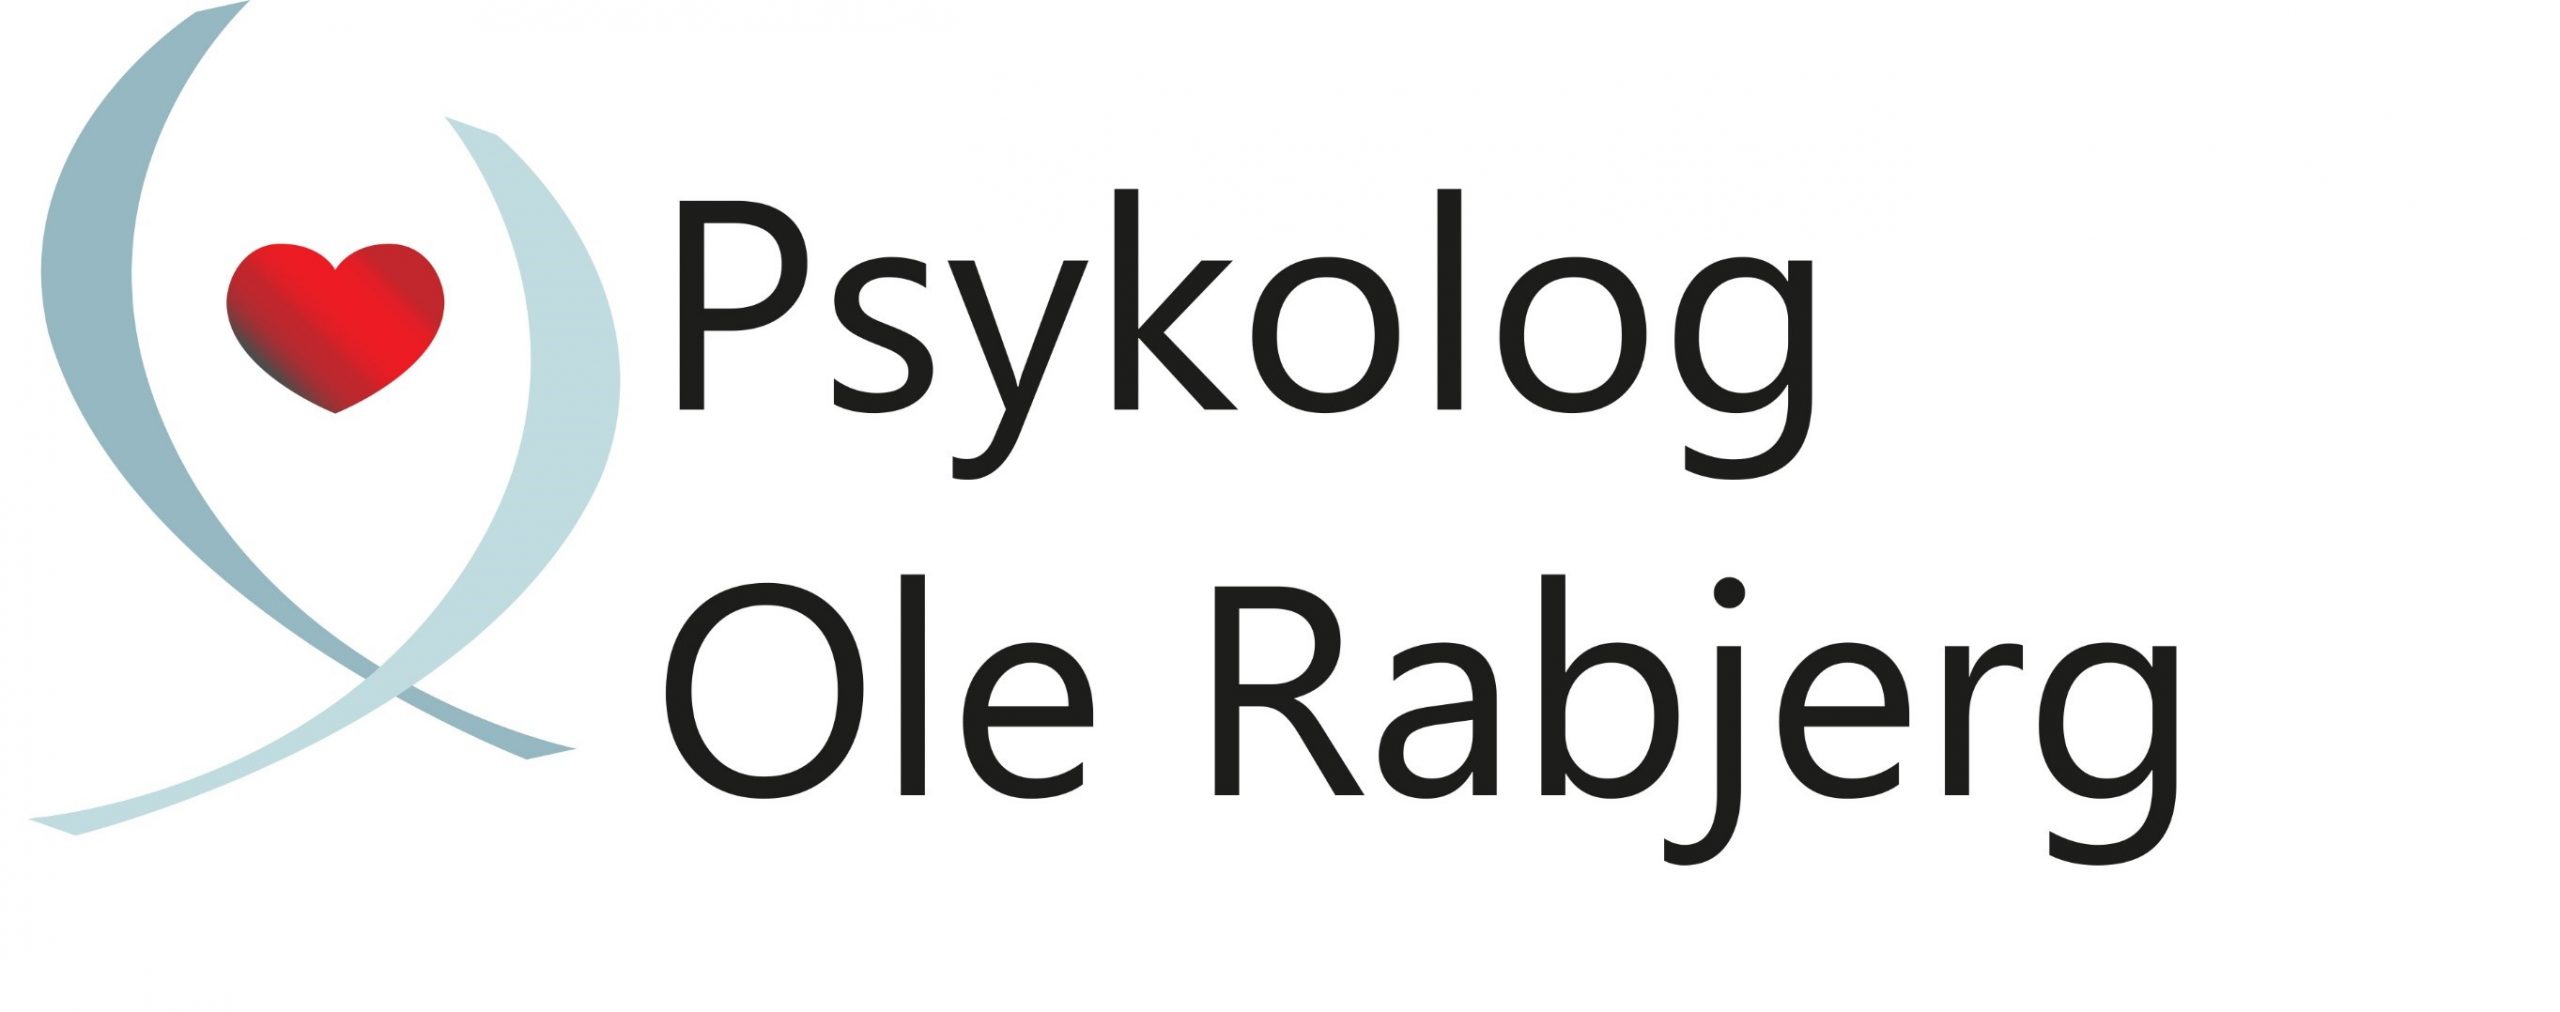 Psykolog Ole Rabjerg